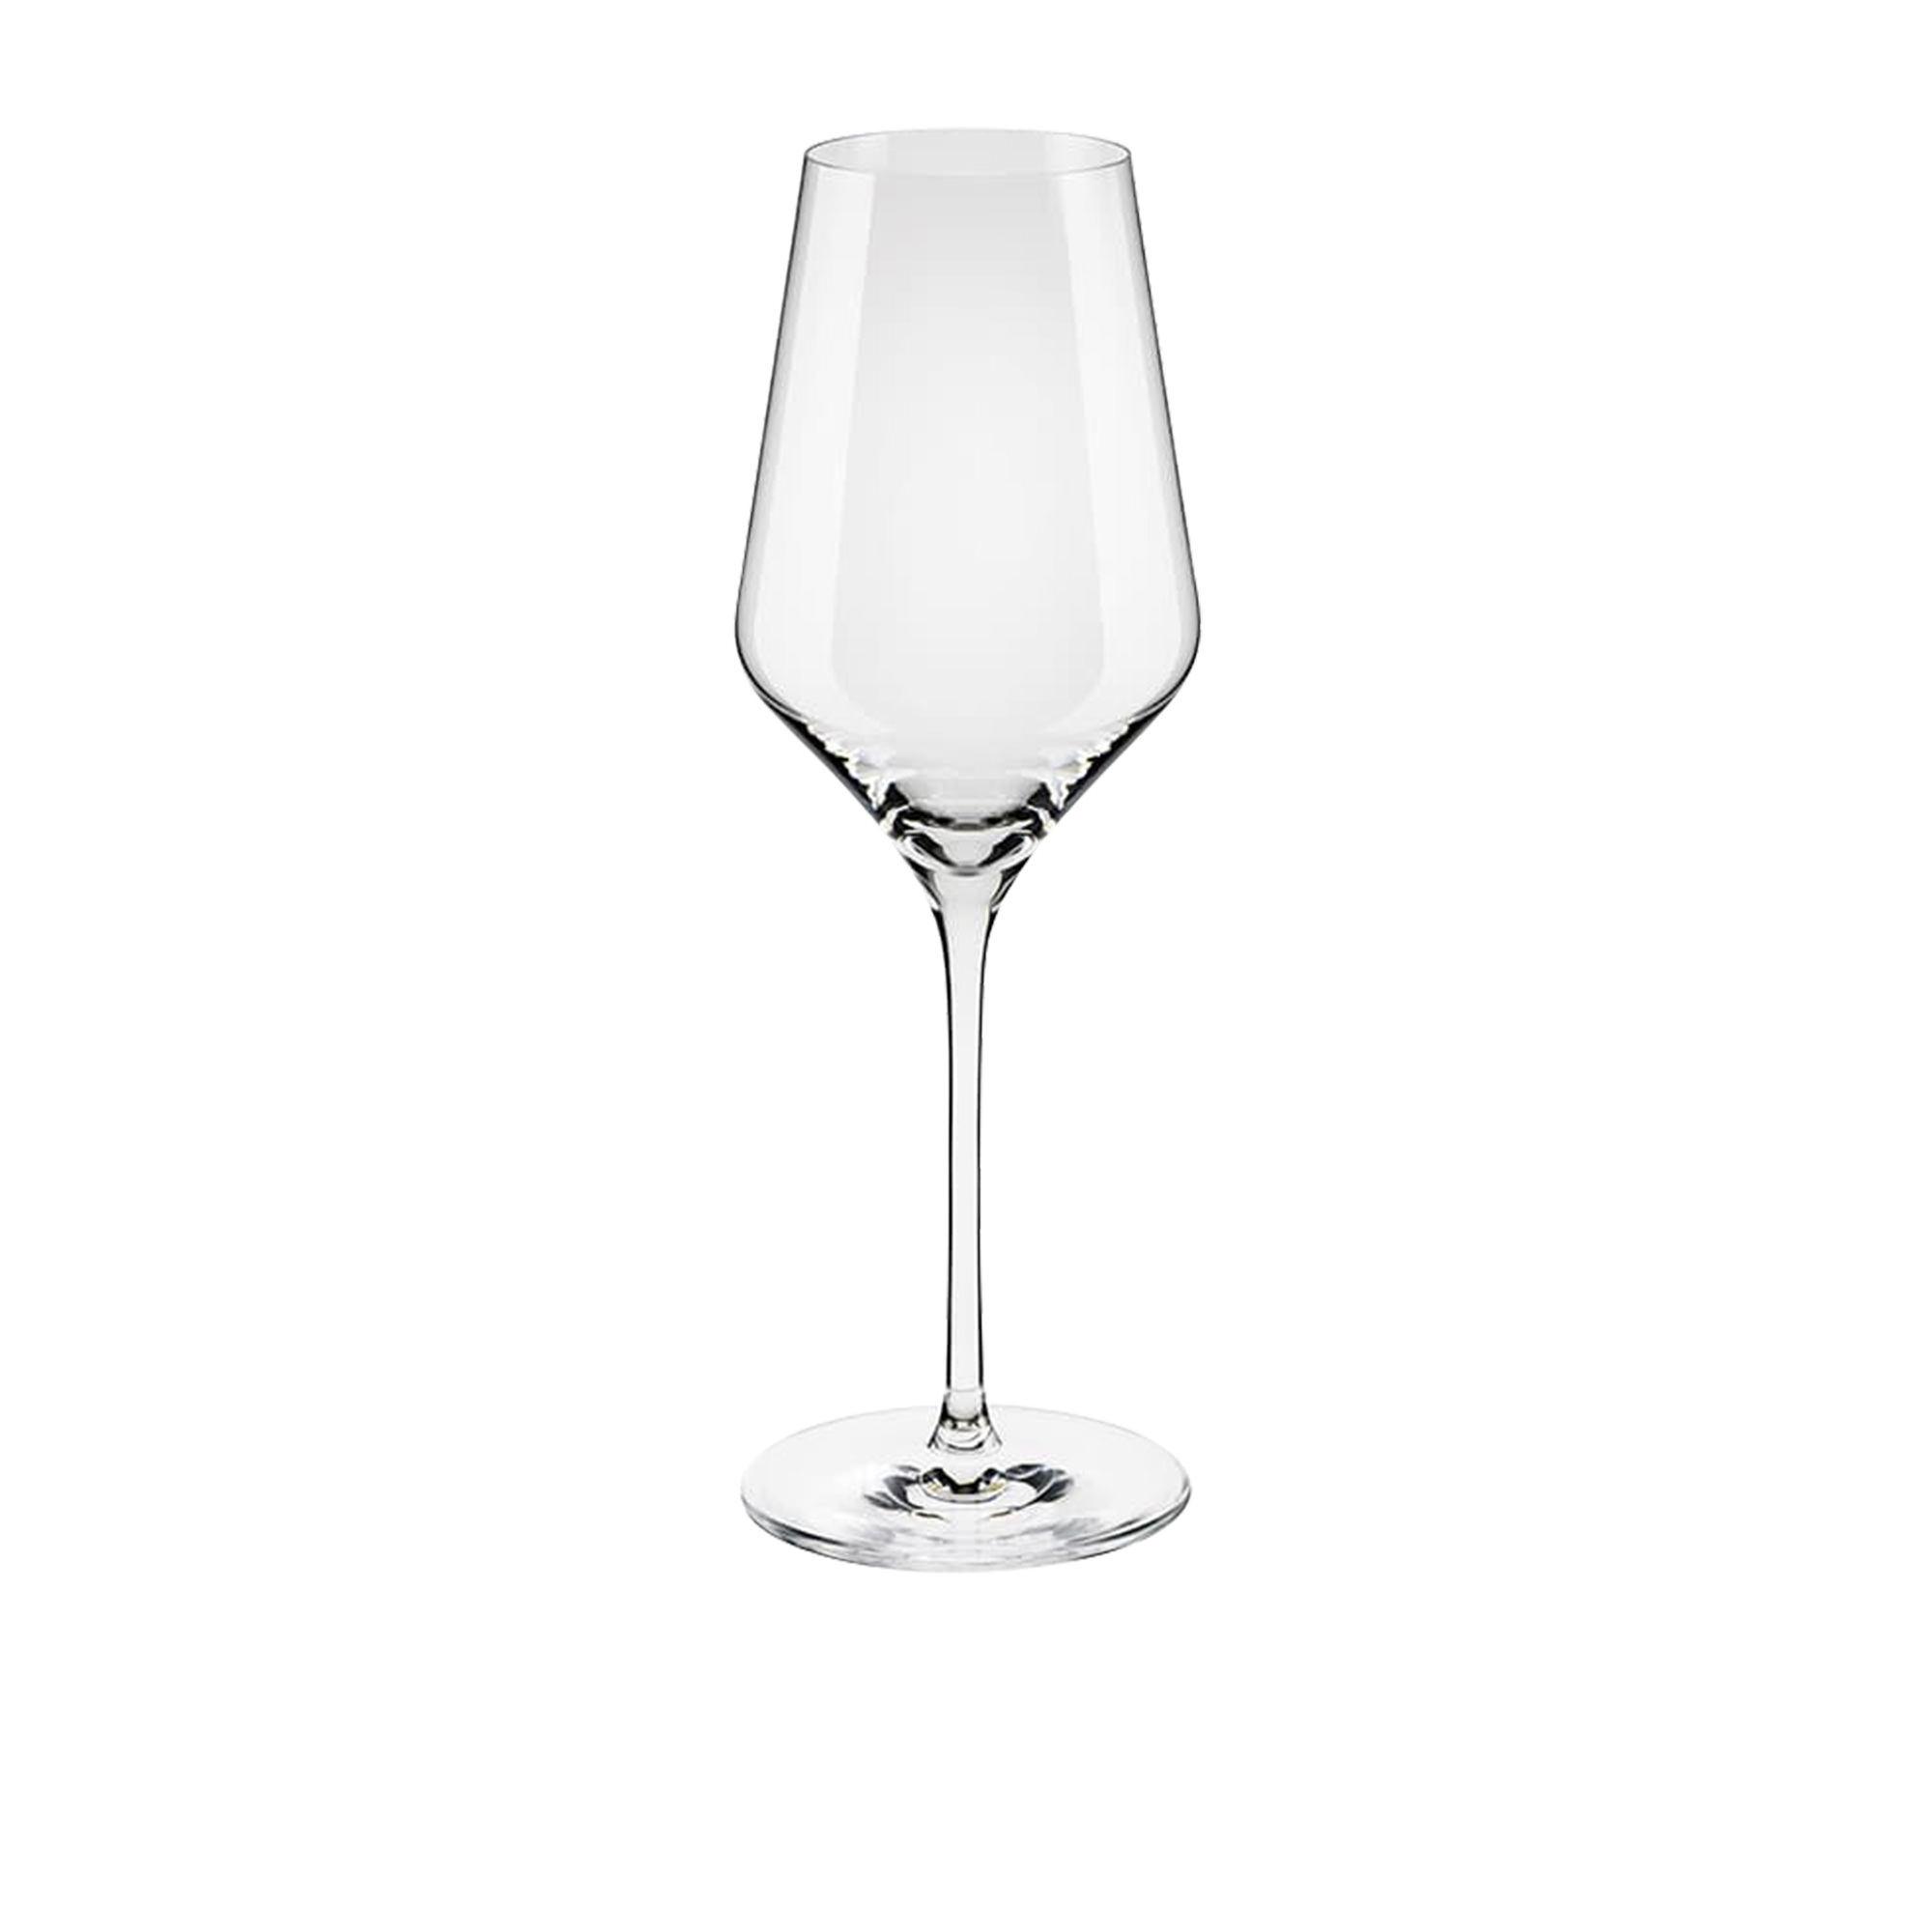 Le Creuset White Wine Glass 485ml Set of 4 Image 3